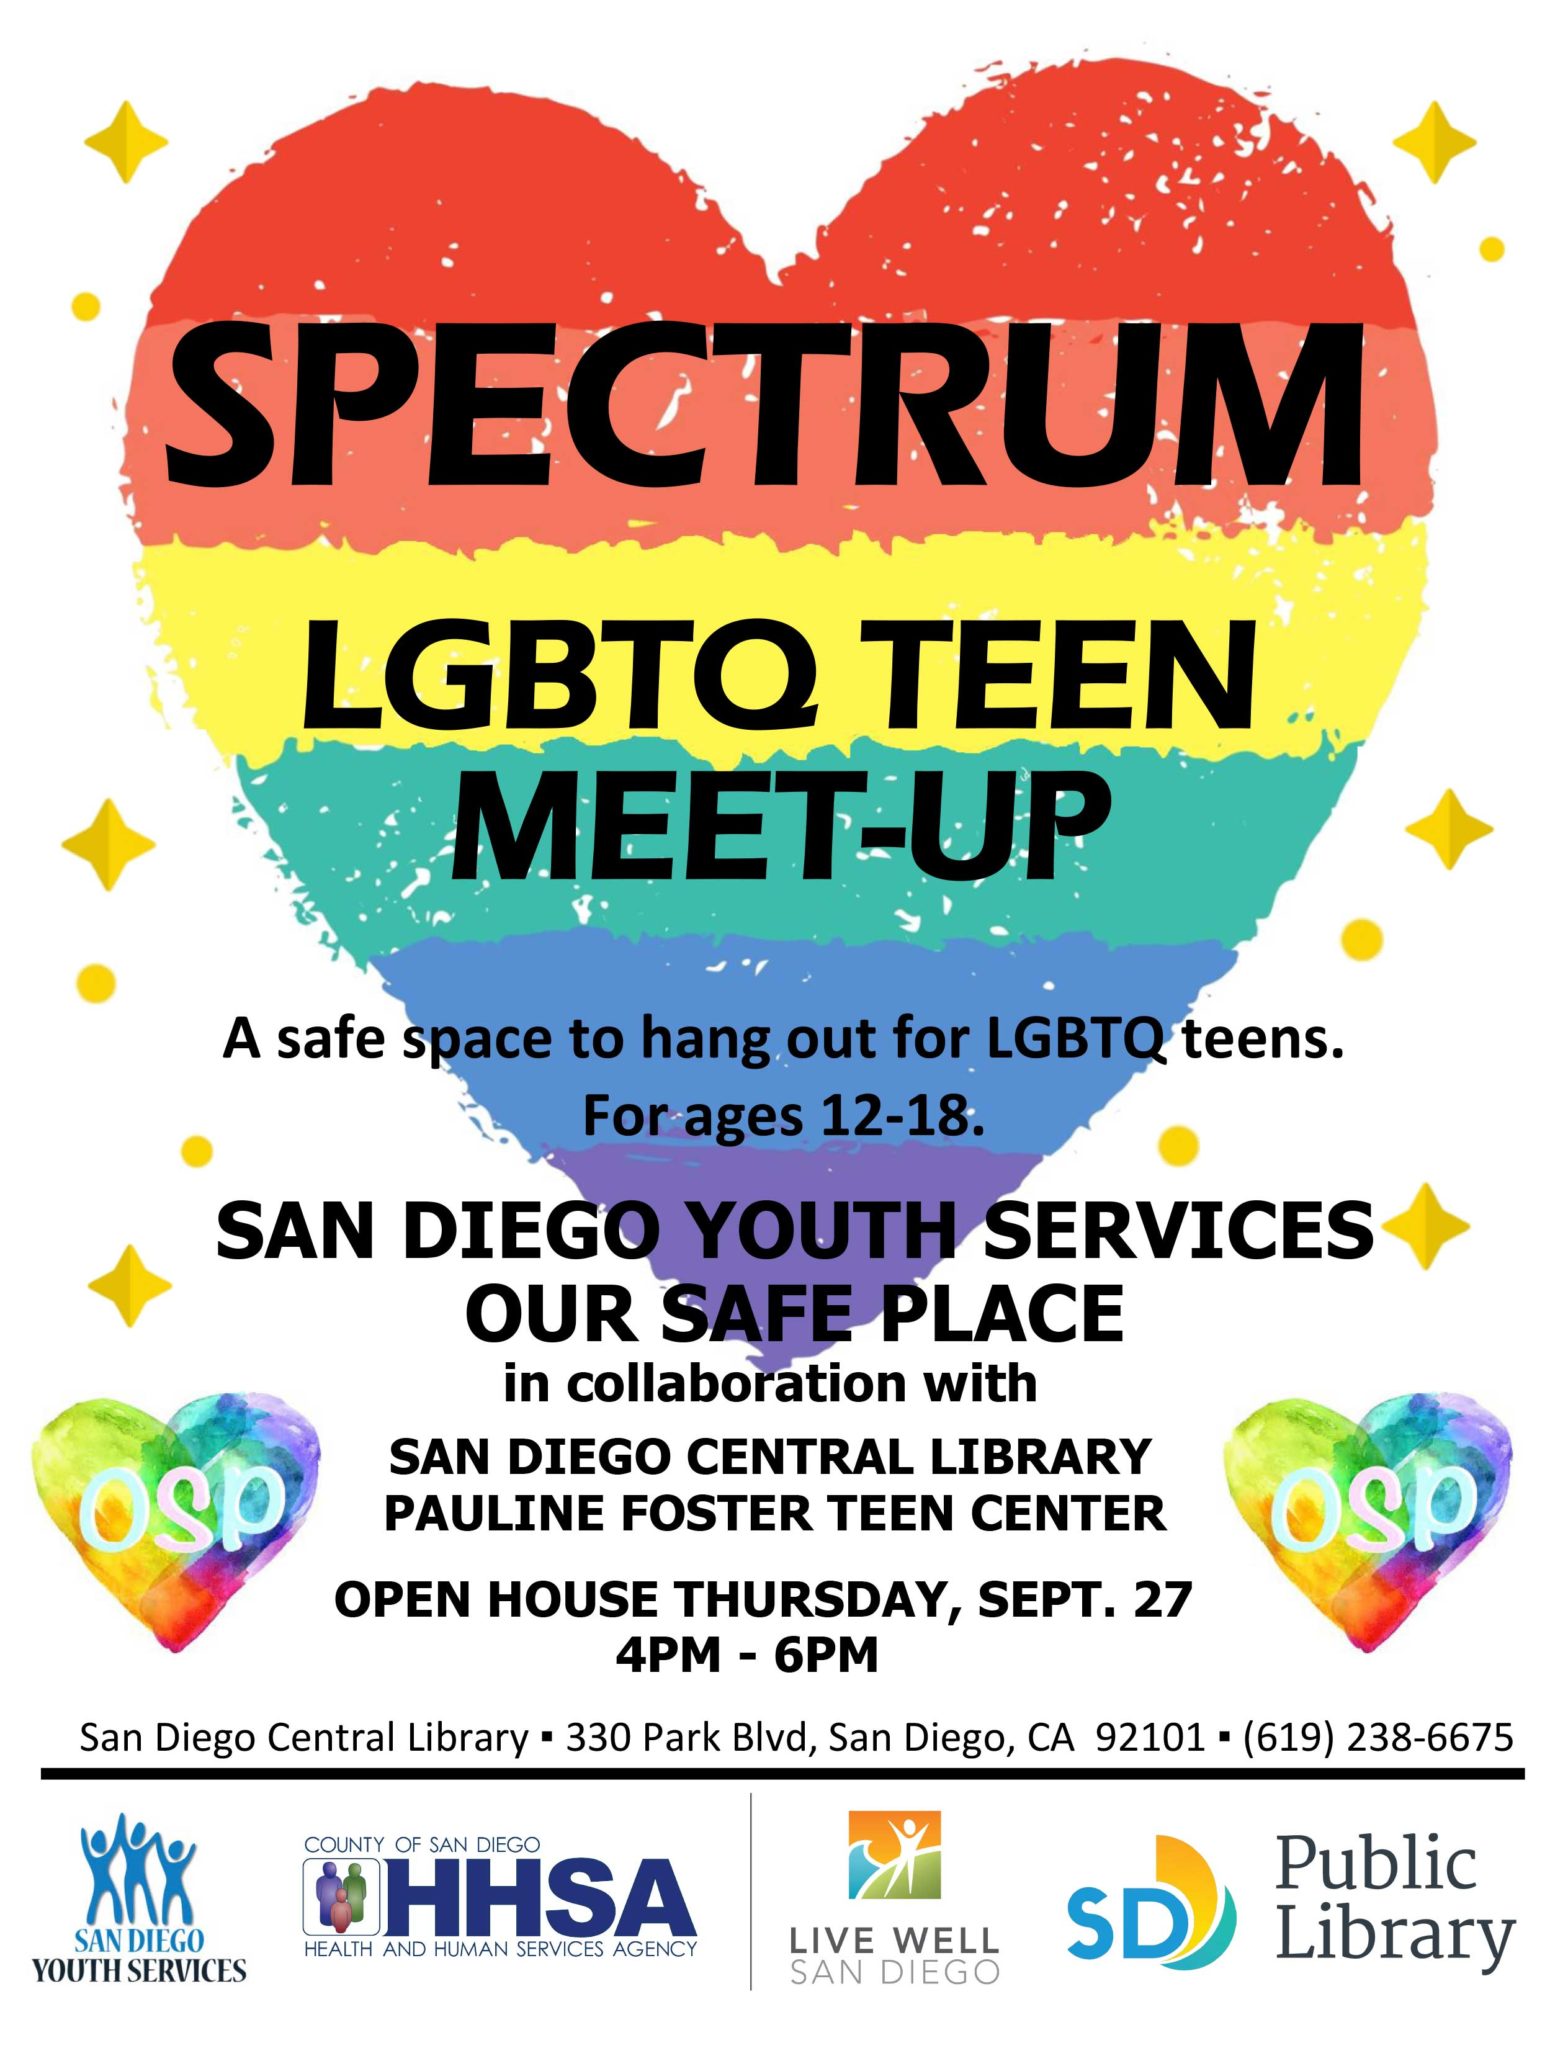 SDCL Spectrum Flyer